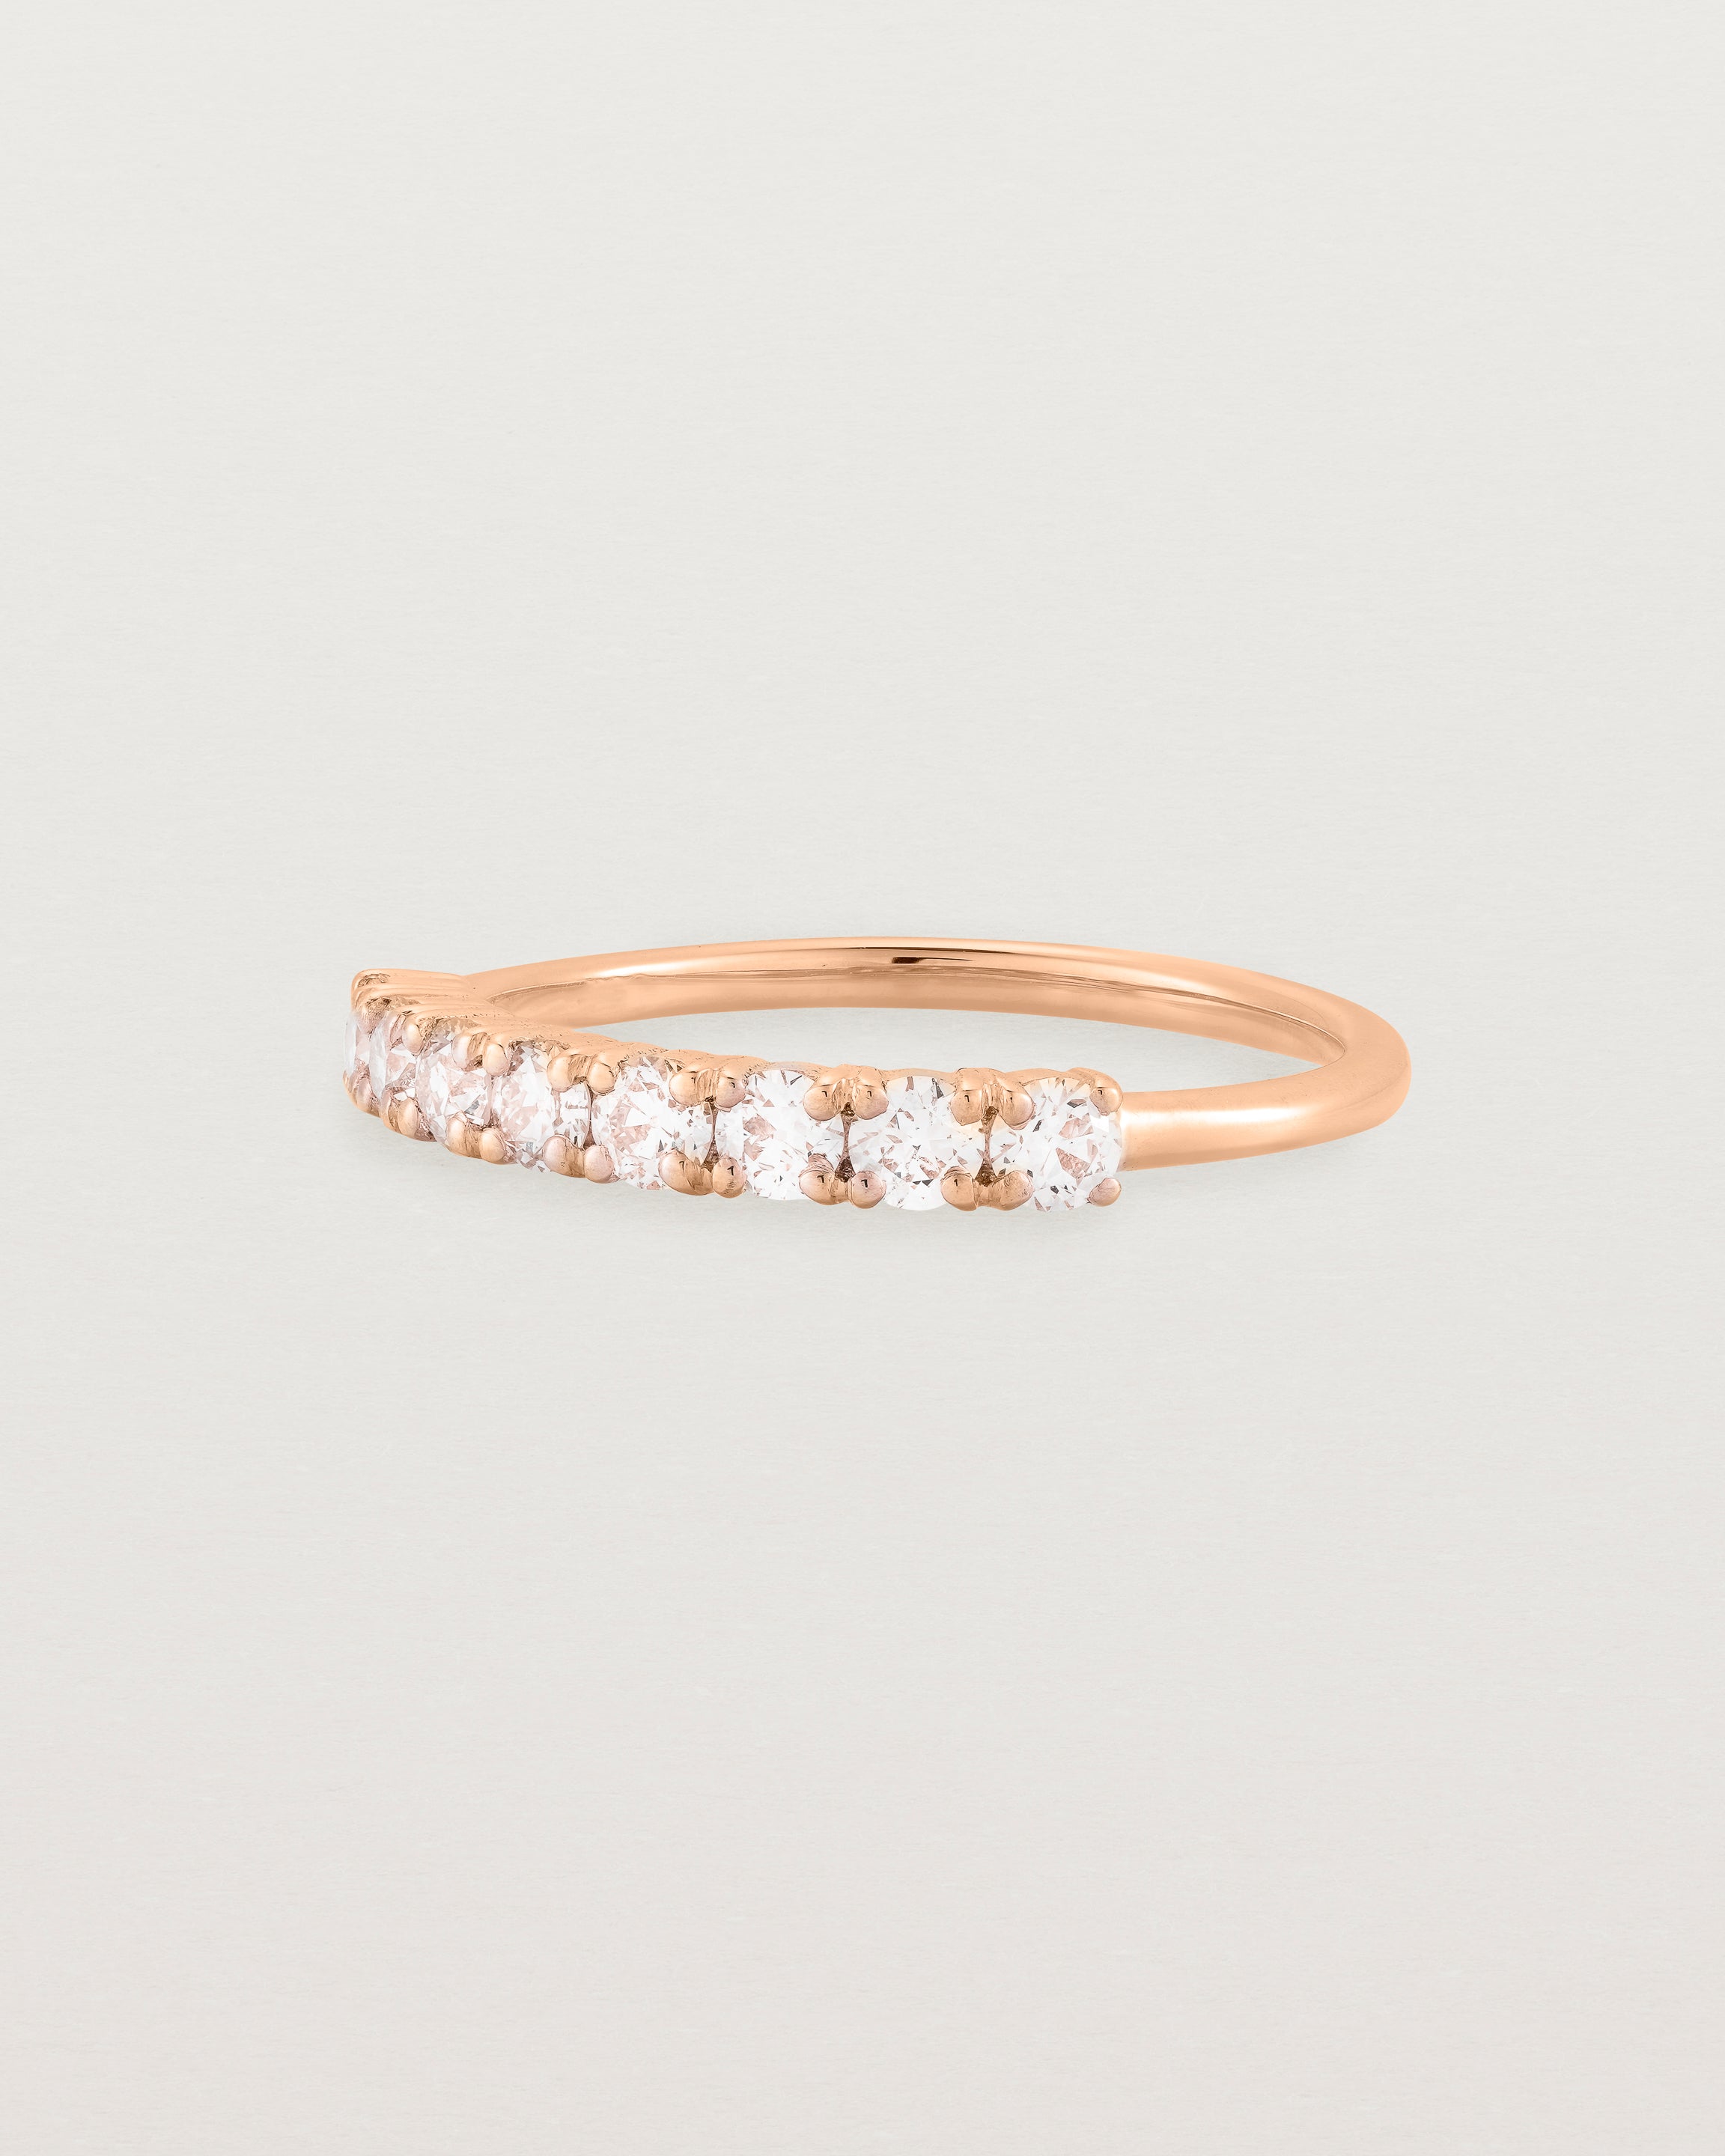 Rose Gold Diamond ring featuring seven white diamonds